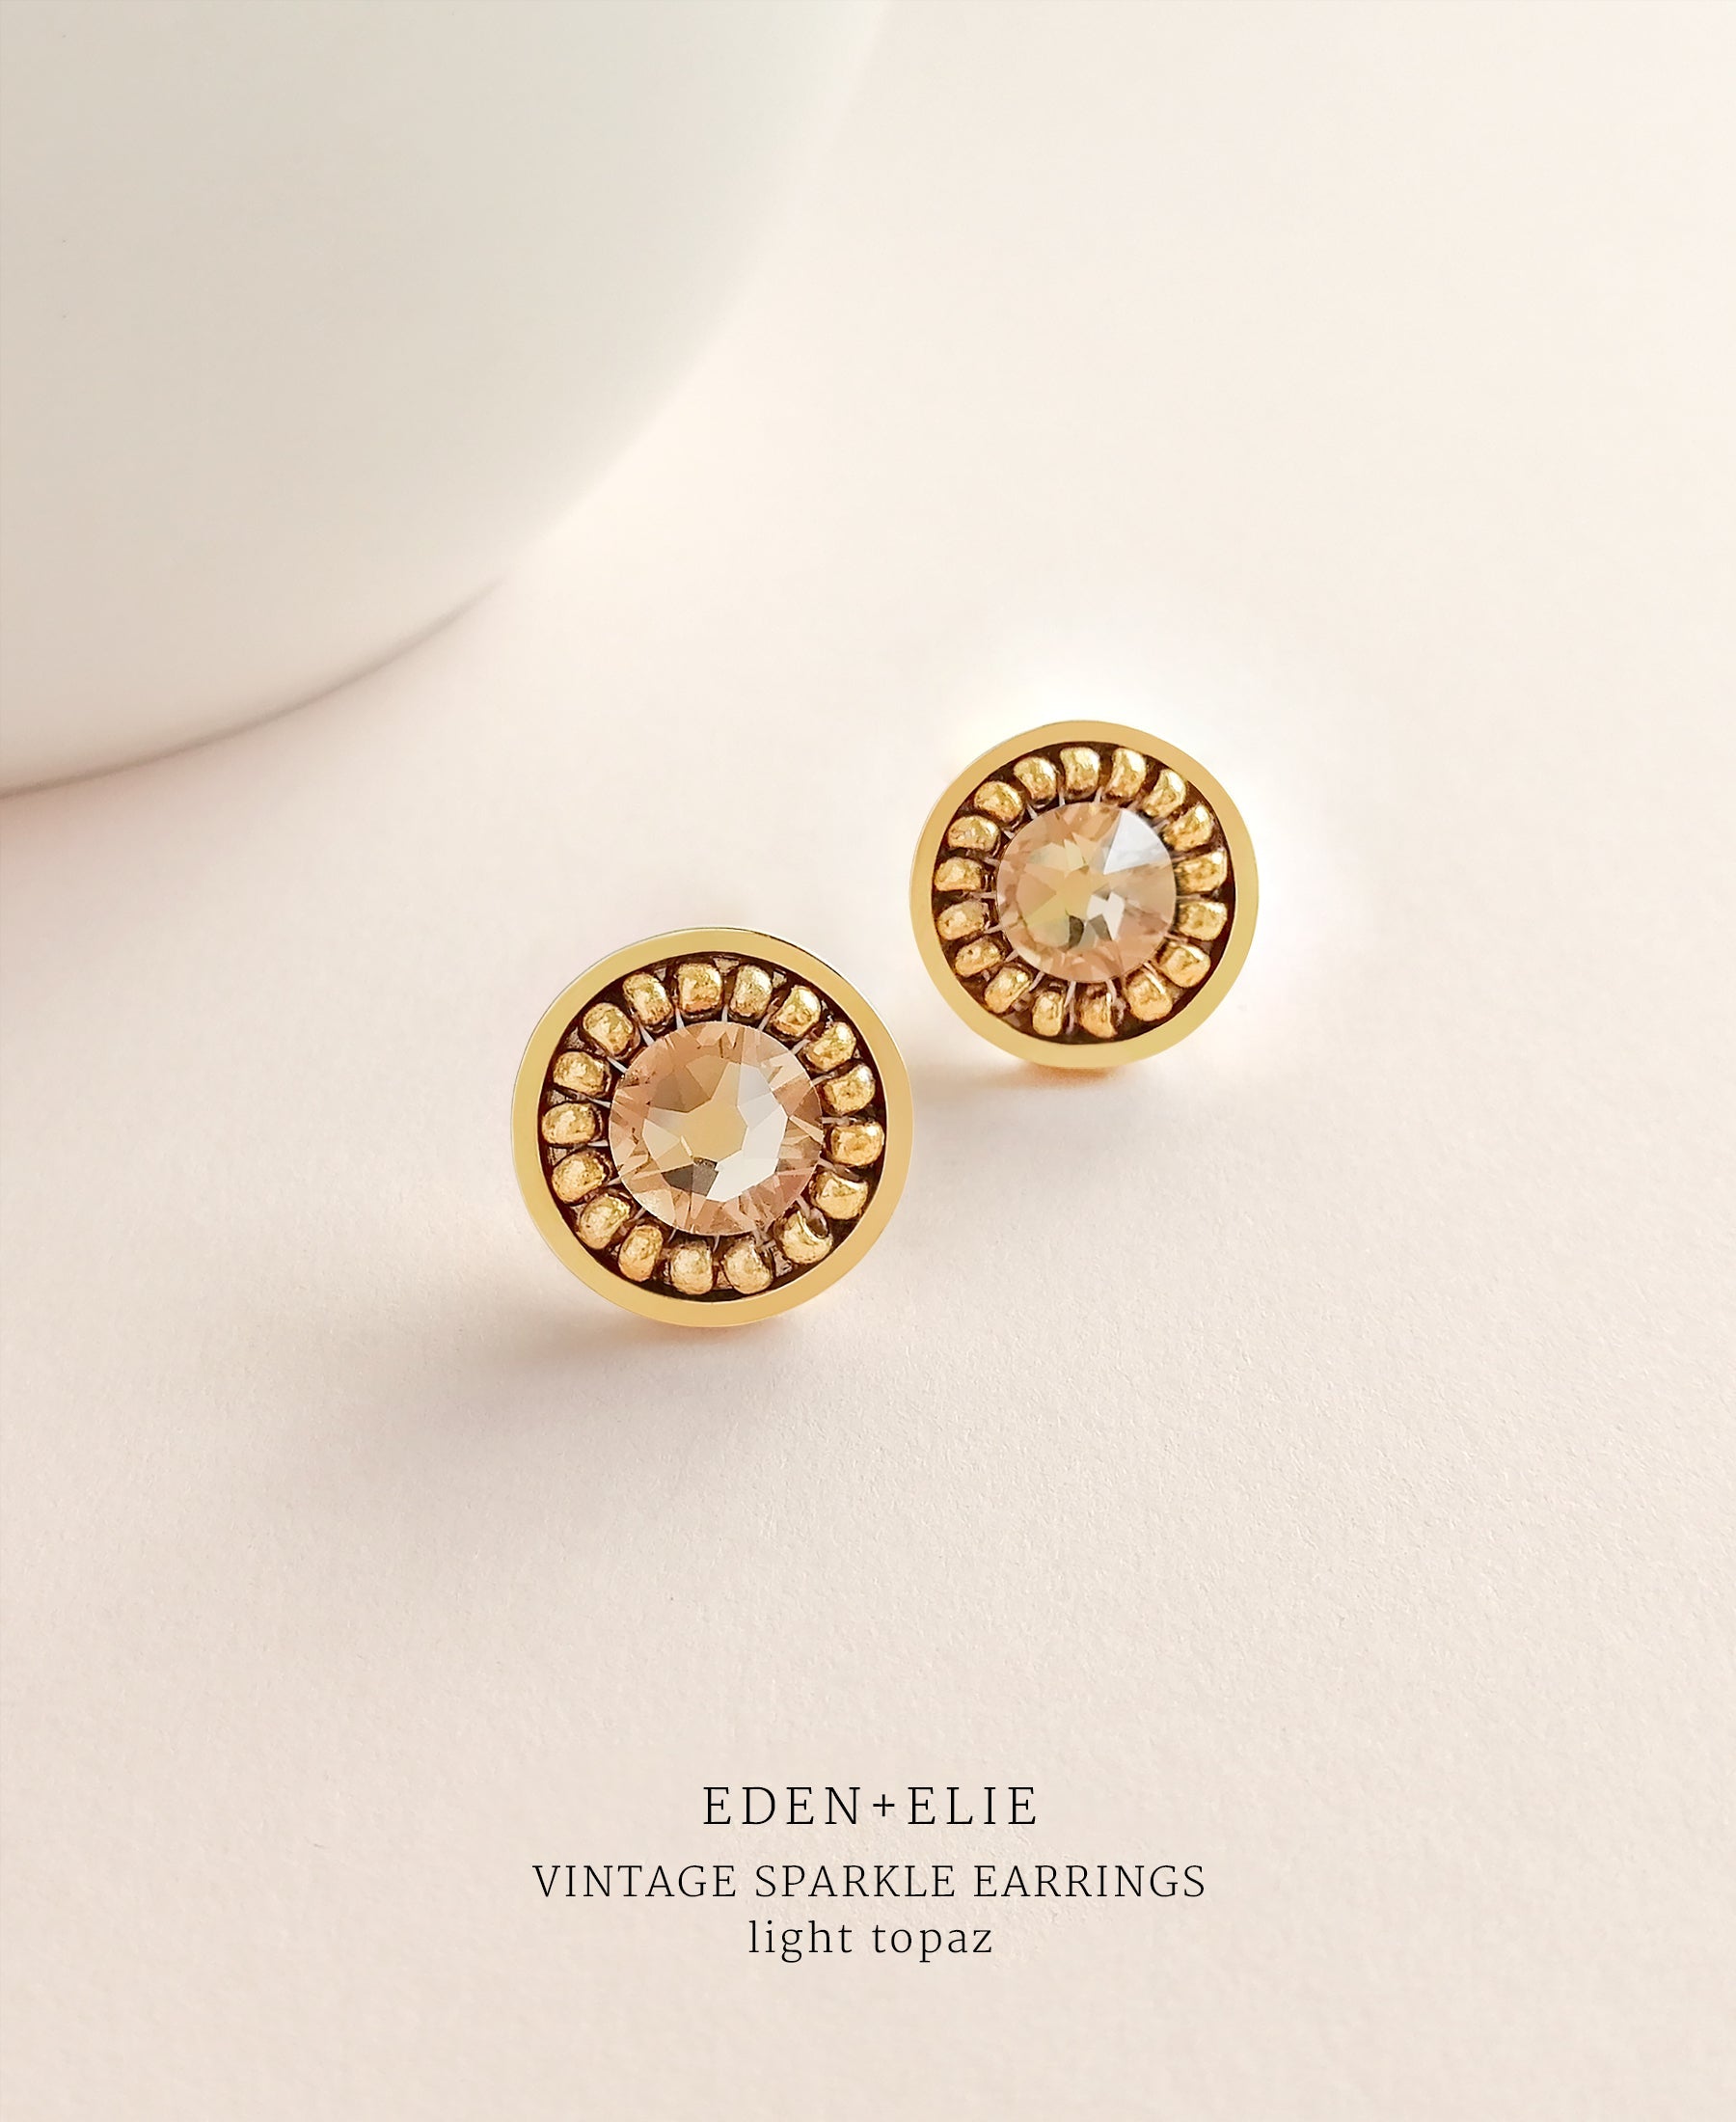 EDEN + ELIE gold plated jewelry Vintage Sparkle stud earrings - light topaz